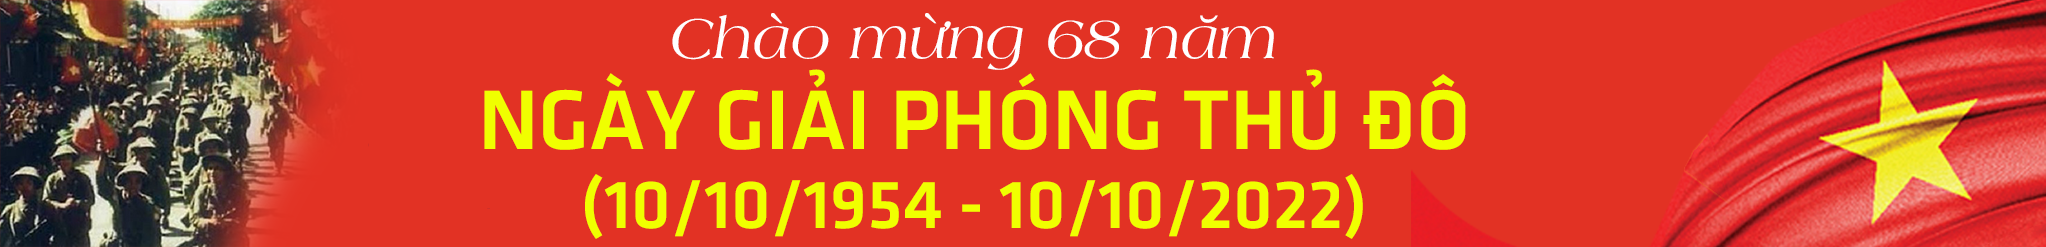 chao-mung-68-nam-ngay-giai-phong-thu-do